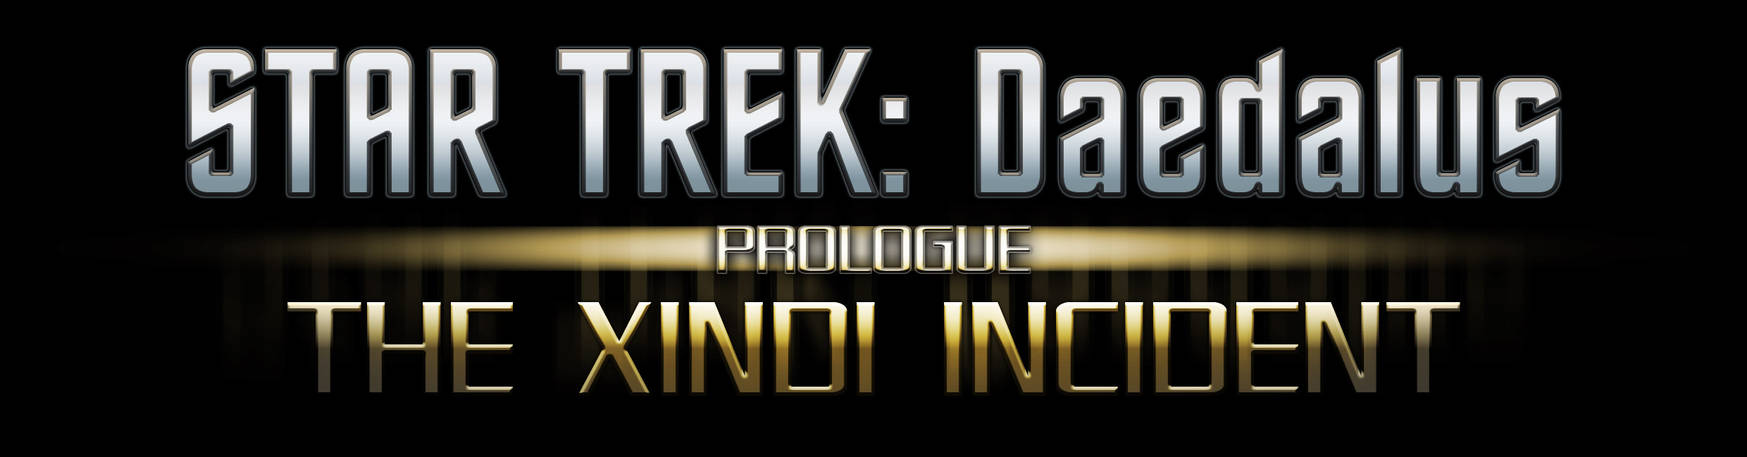 Star Trek: Daedalus